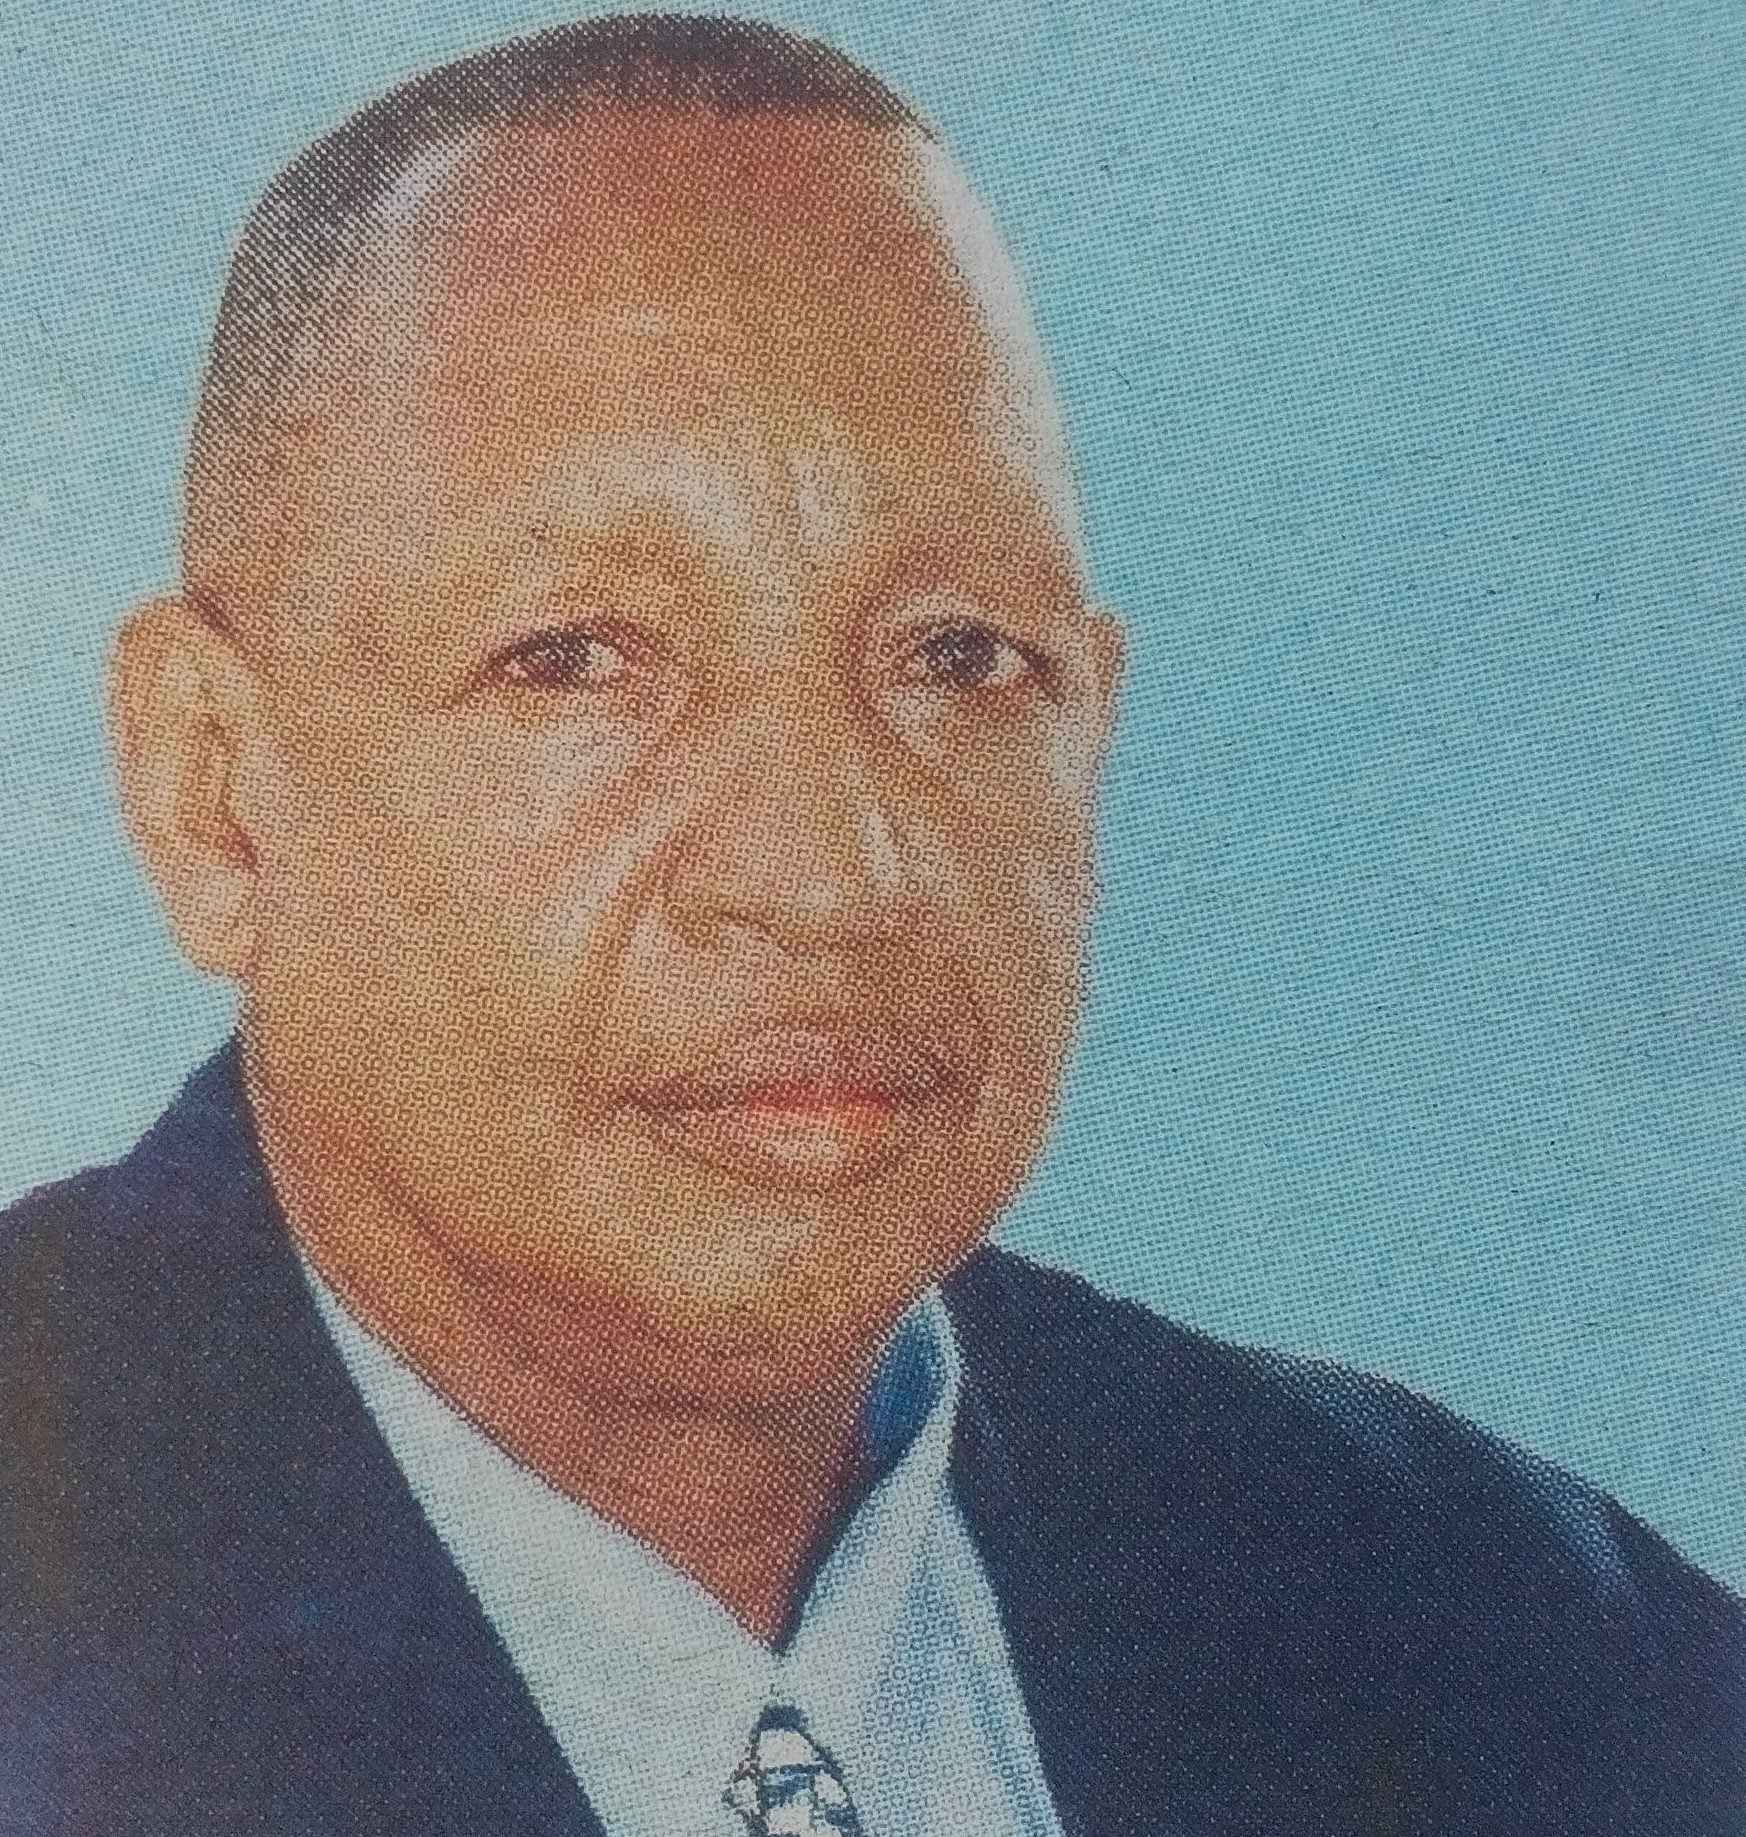 Obituary Image of Patrick Daniel Katee